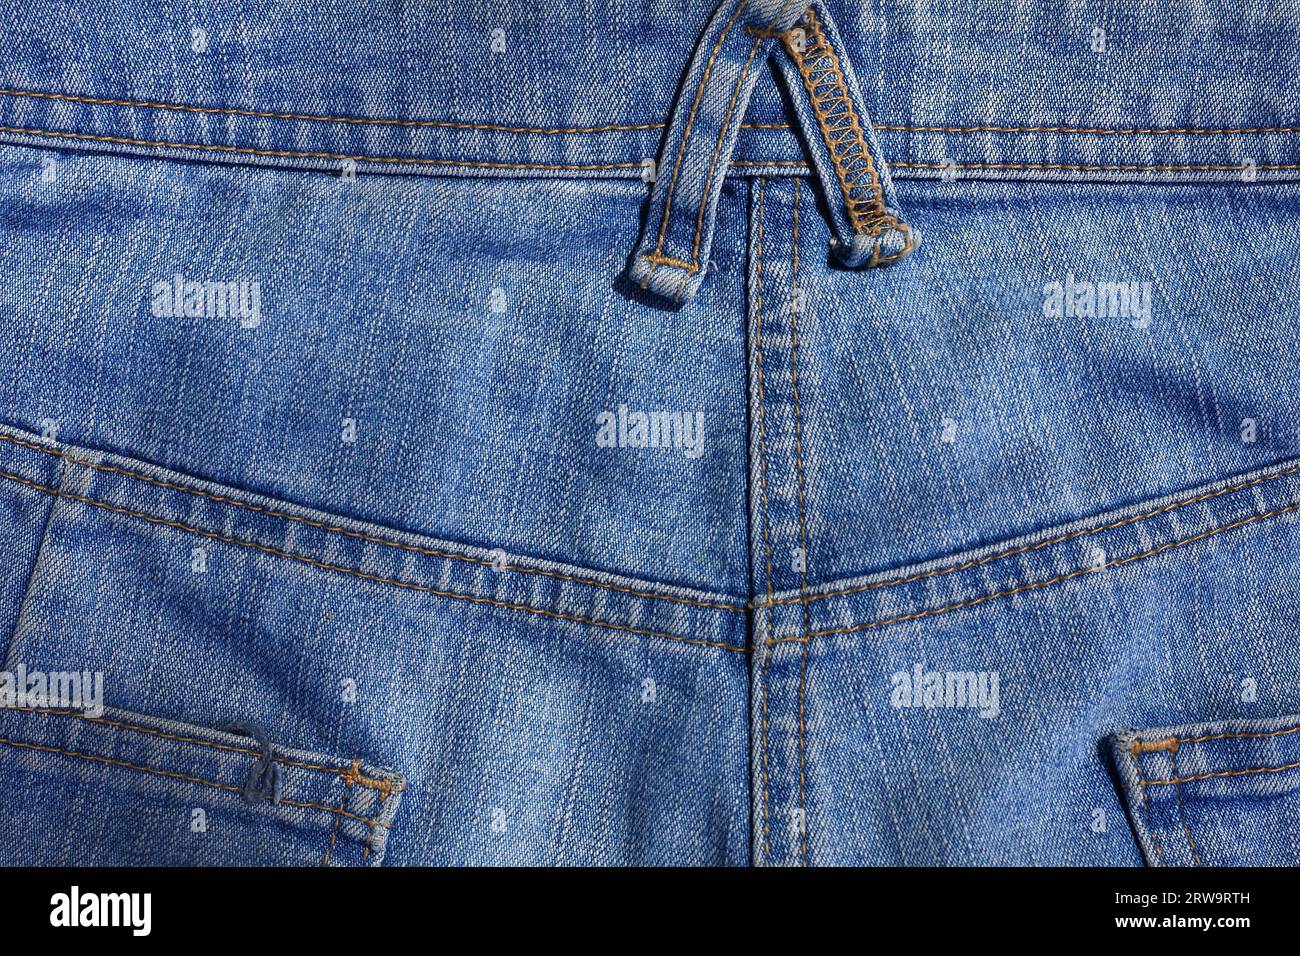 Jeans saddle, taken in full format Stock Photo - Alamy